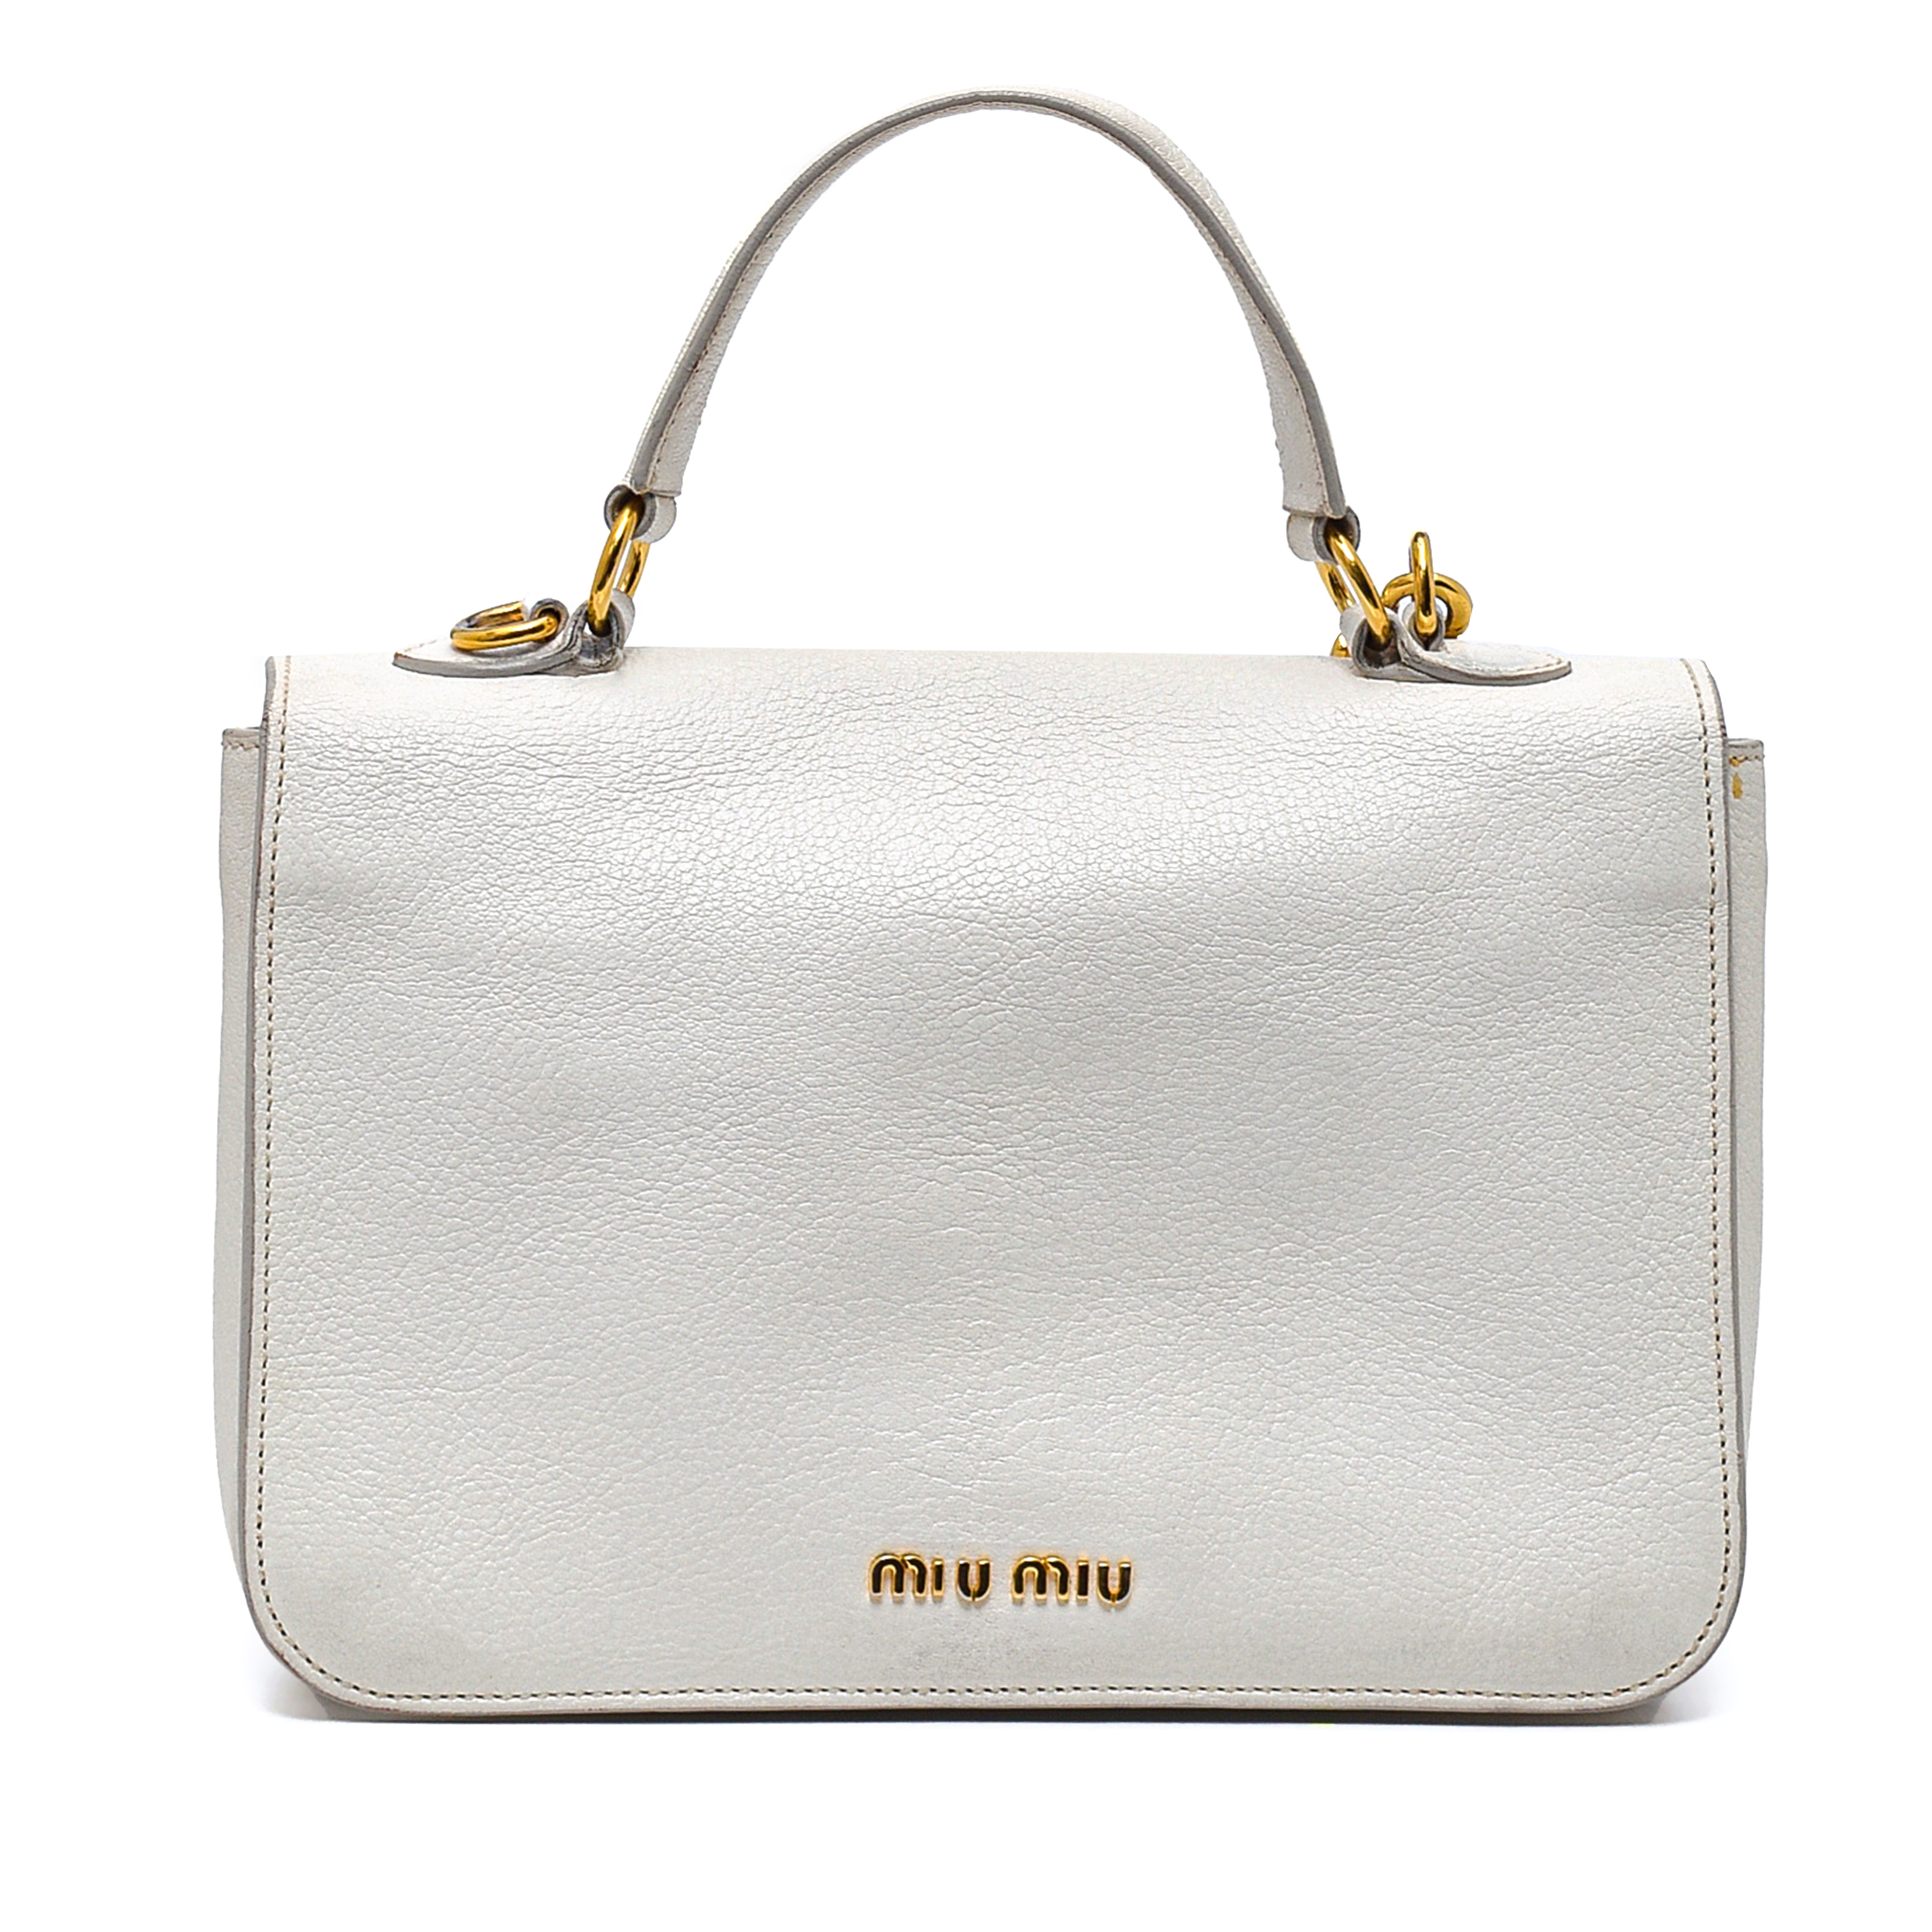 Miu Miu - White Leather Medium Fiorentina Bag